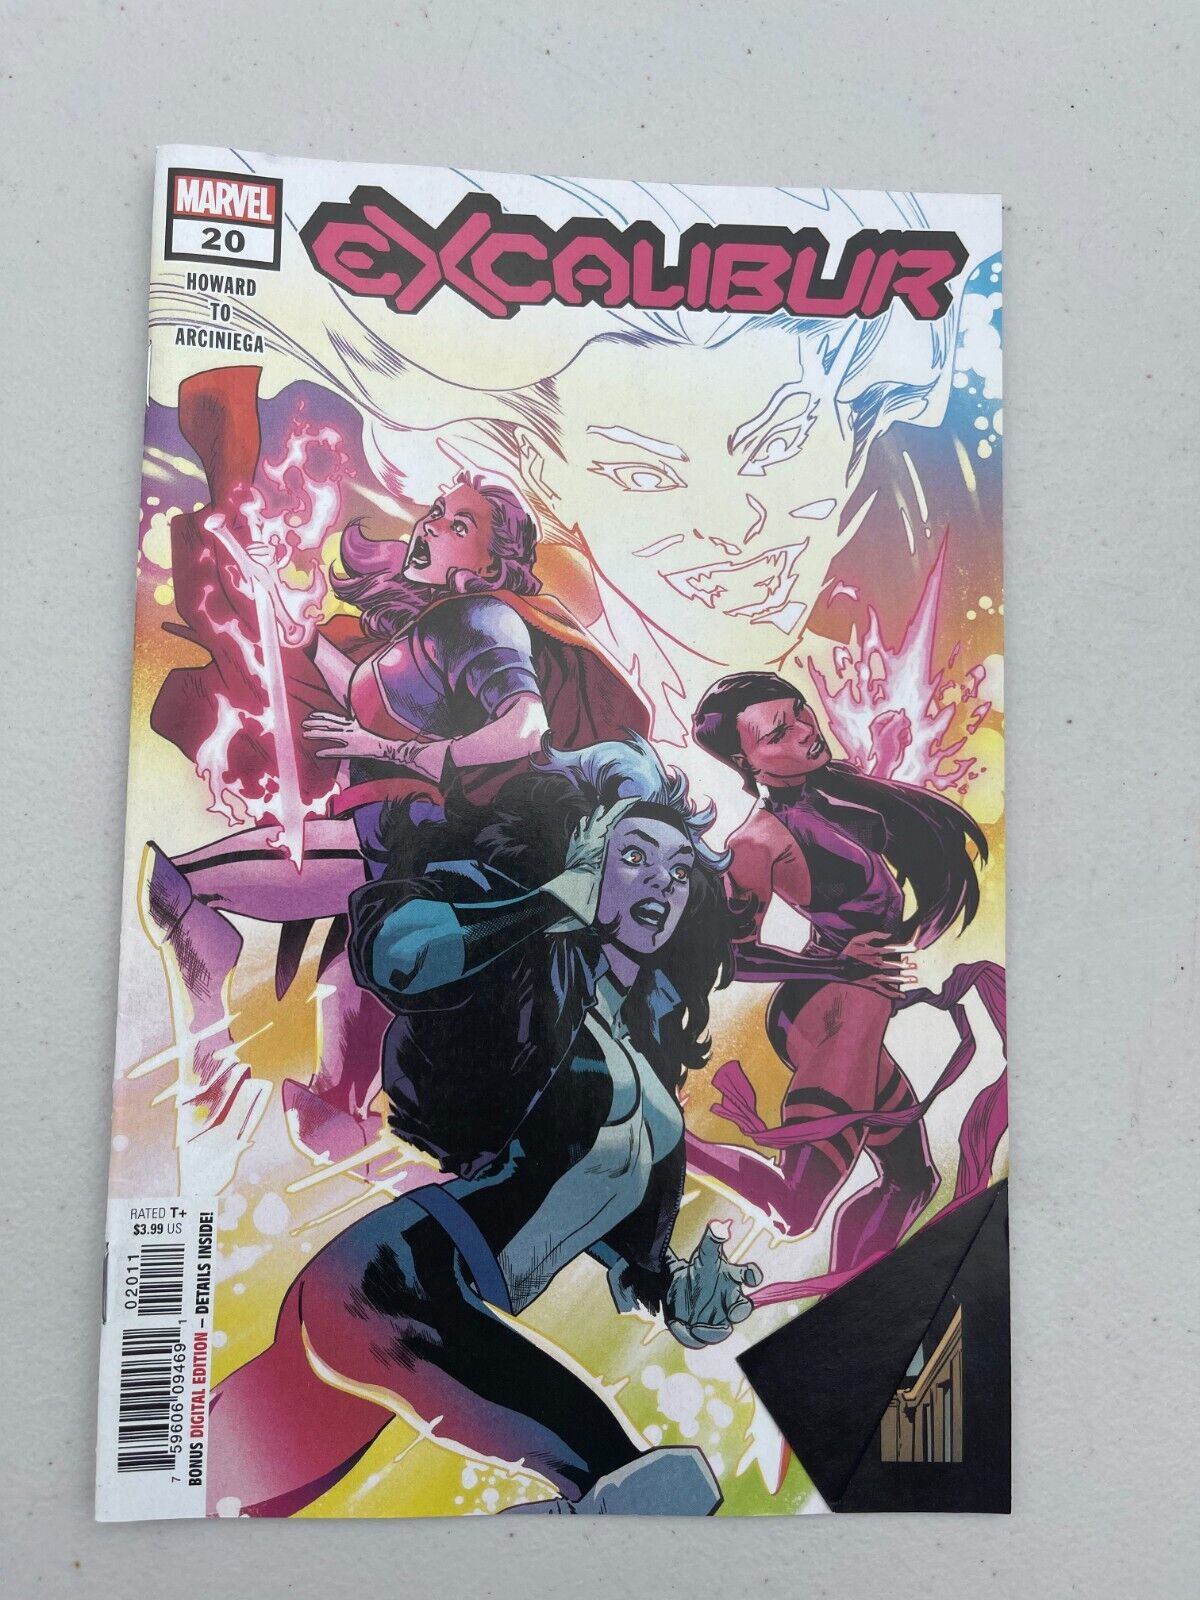 Excalibur Vol 4 #20 April 7, 2021 Marvel Comics Book by Tini Howard